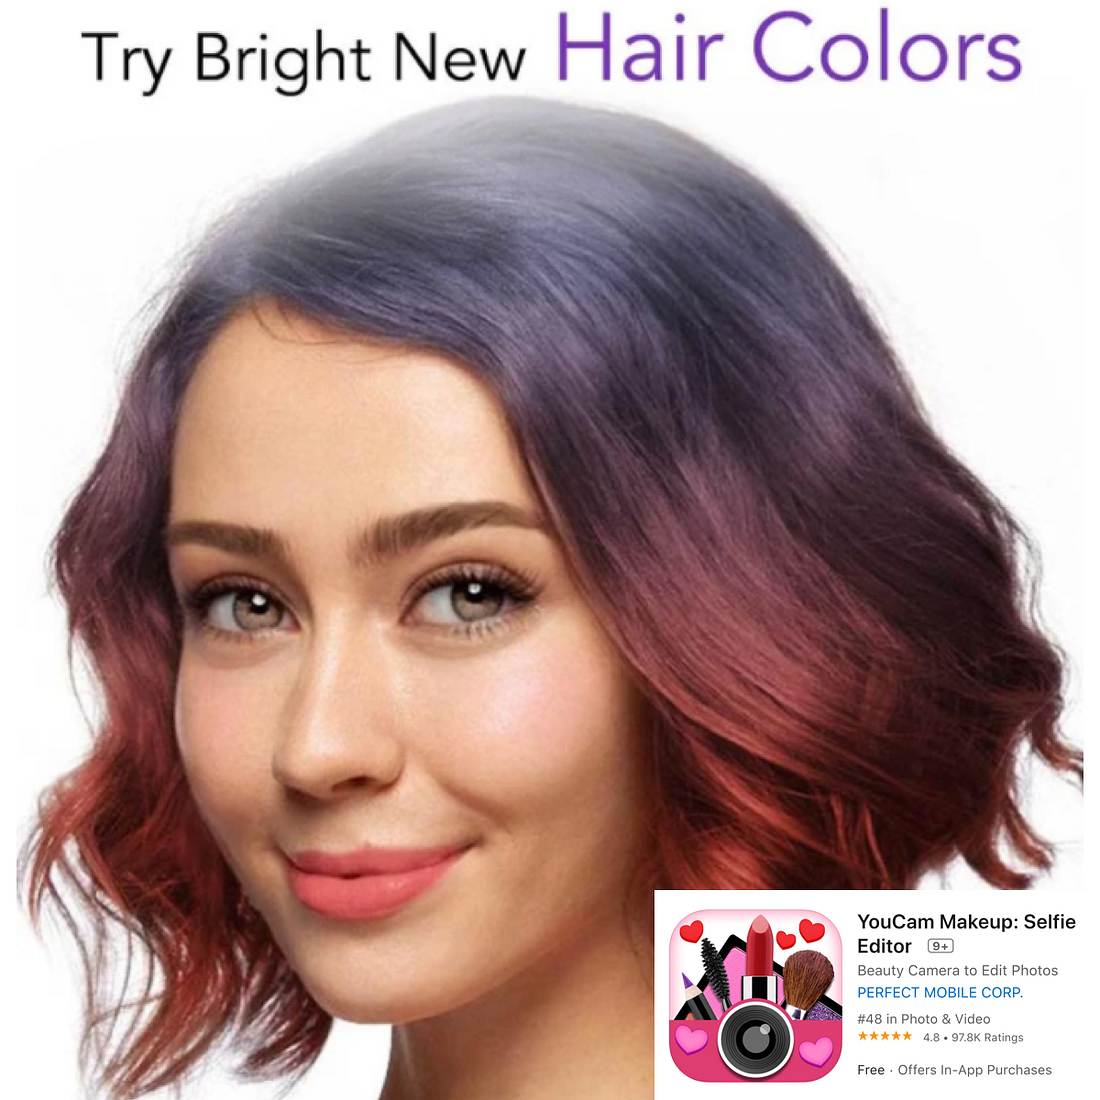 Frisuren und Haarfarben testen mit YouCam Makeup: Selfie Editor